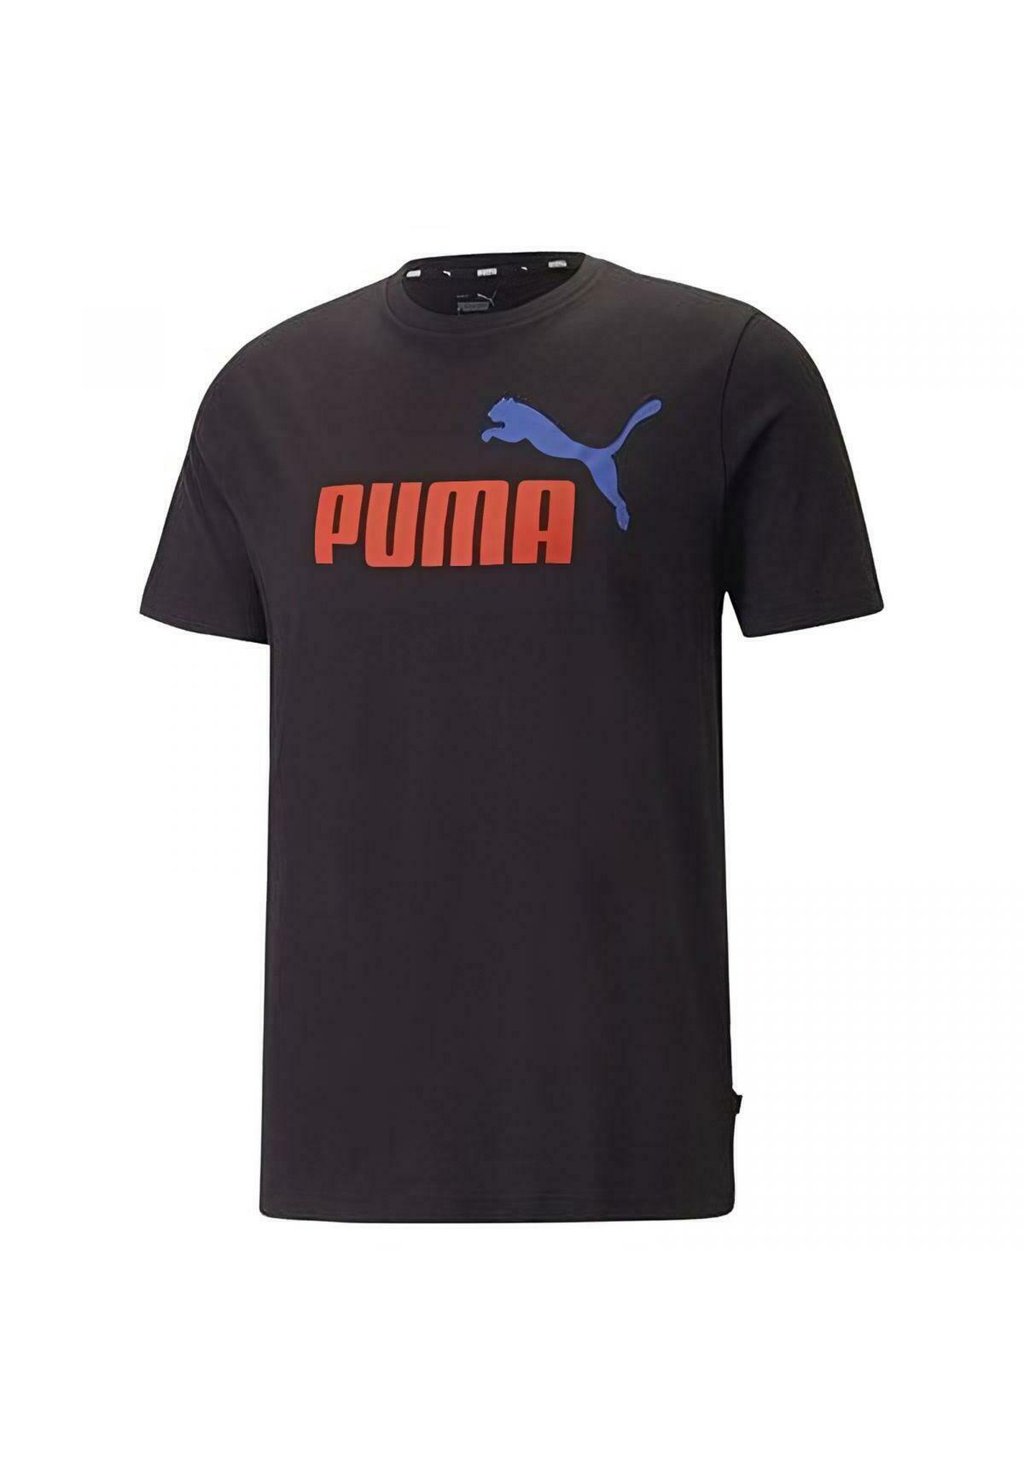 Спортивная футболка ESS With LOGO Puma, цвет nero rosso blu royal